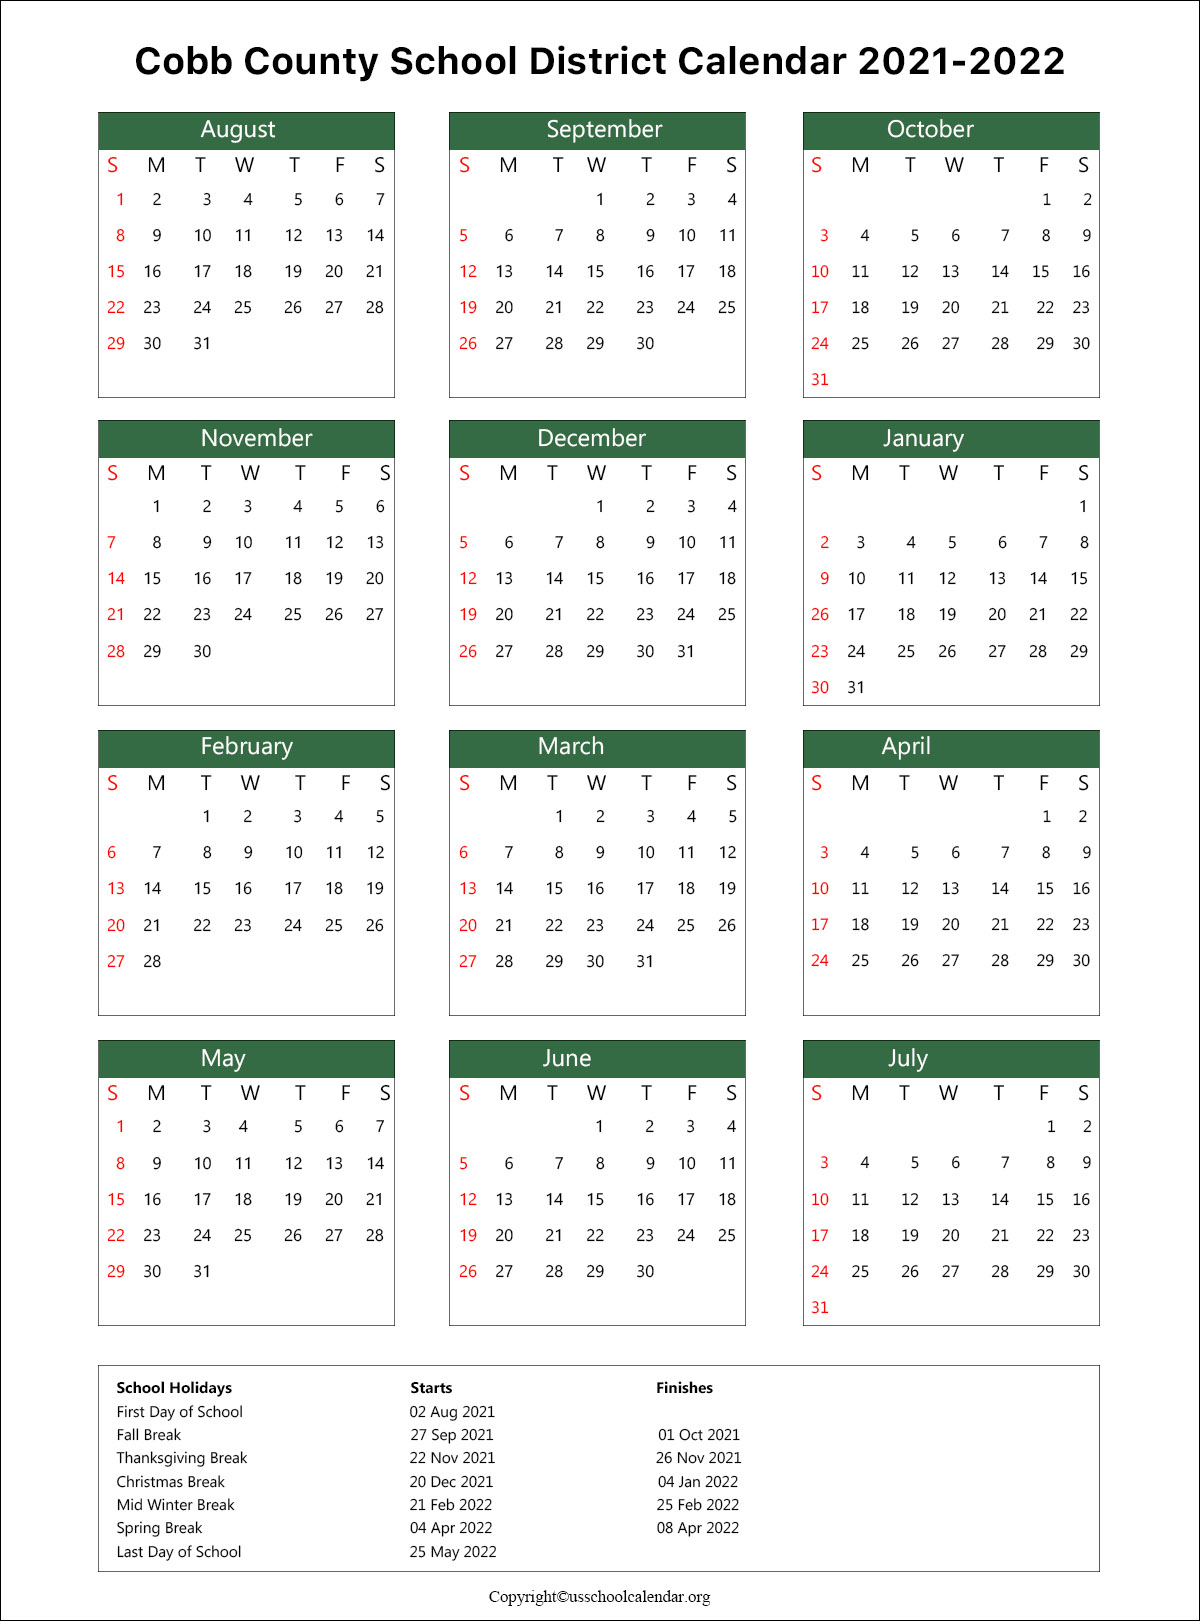 cobb-county-school-calendar-with-holidays-2021-2022